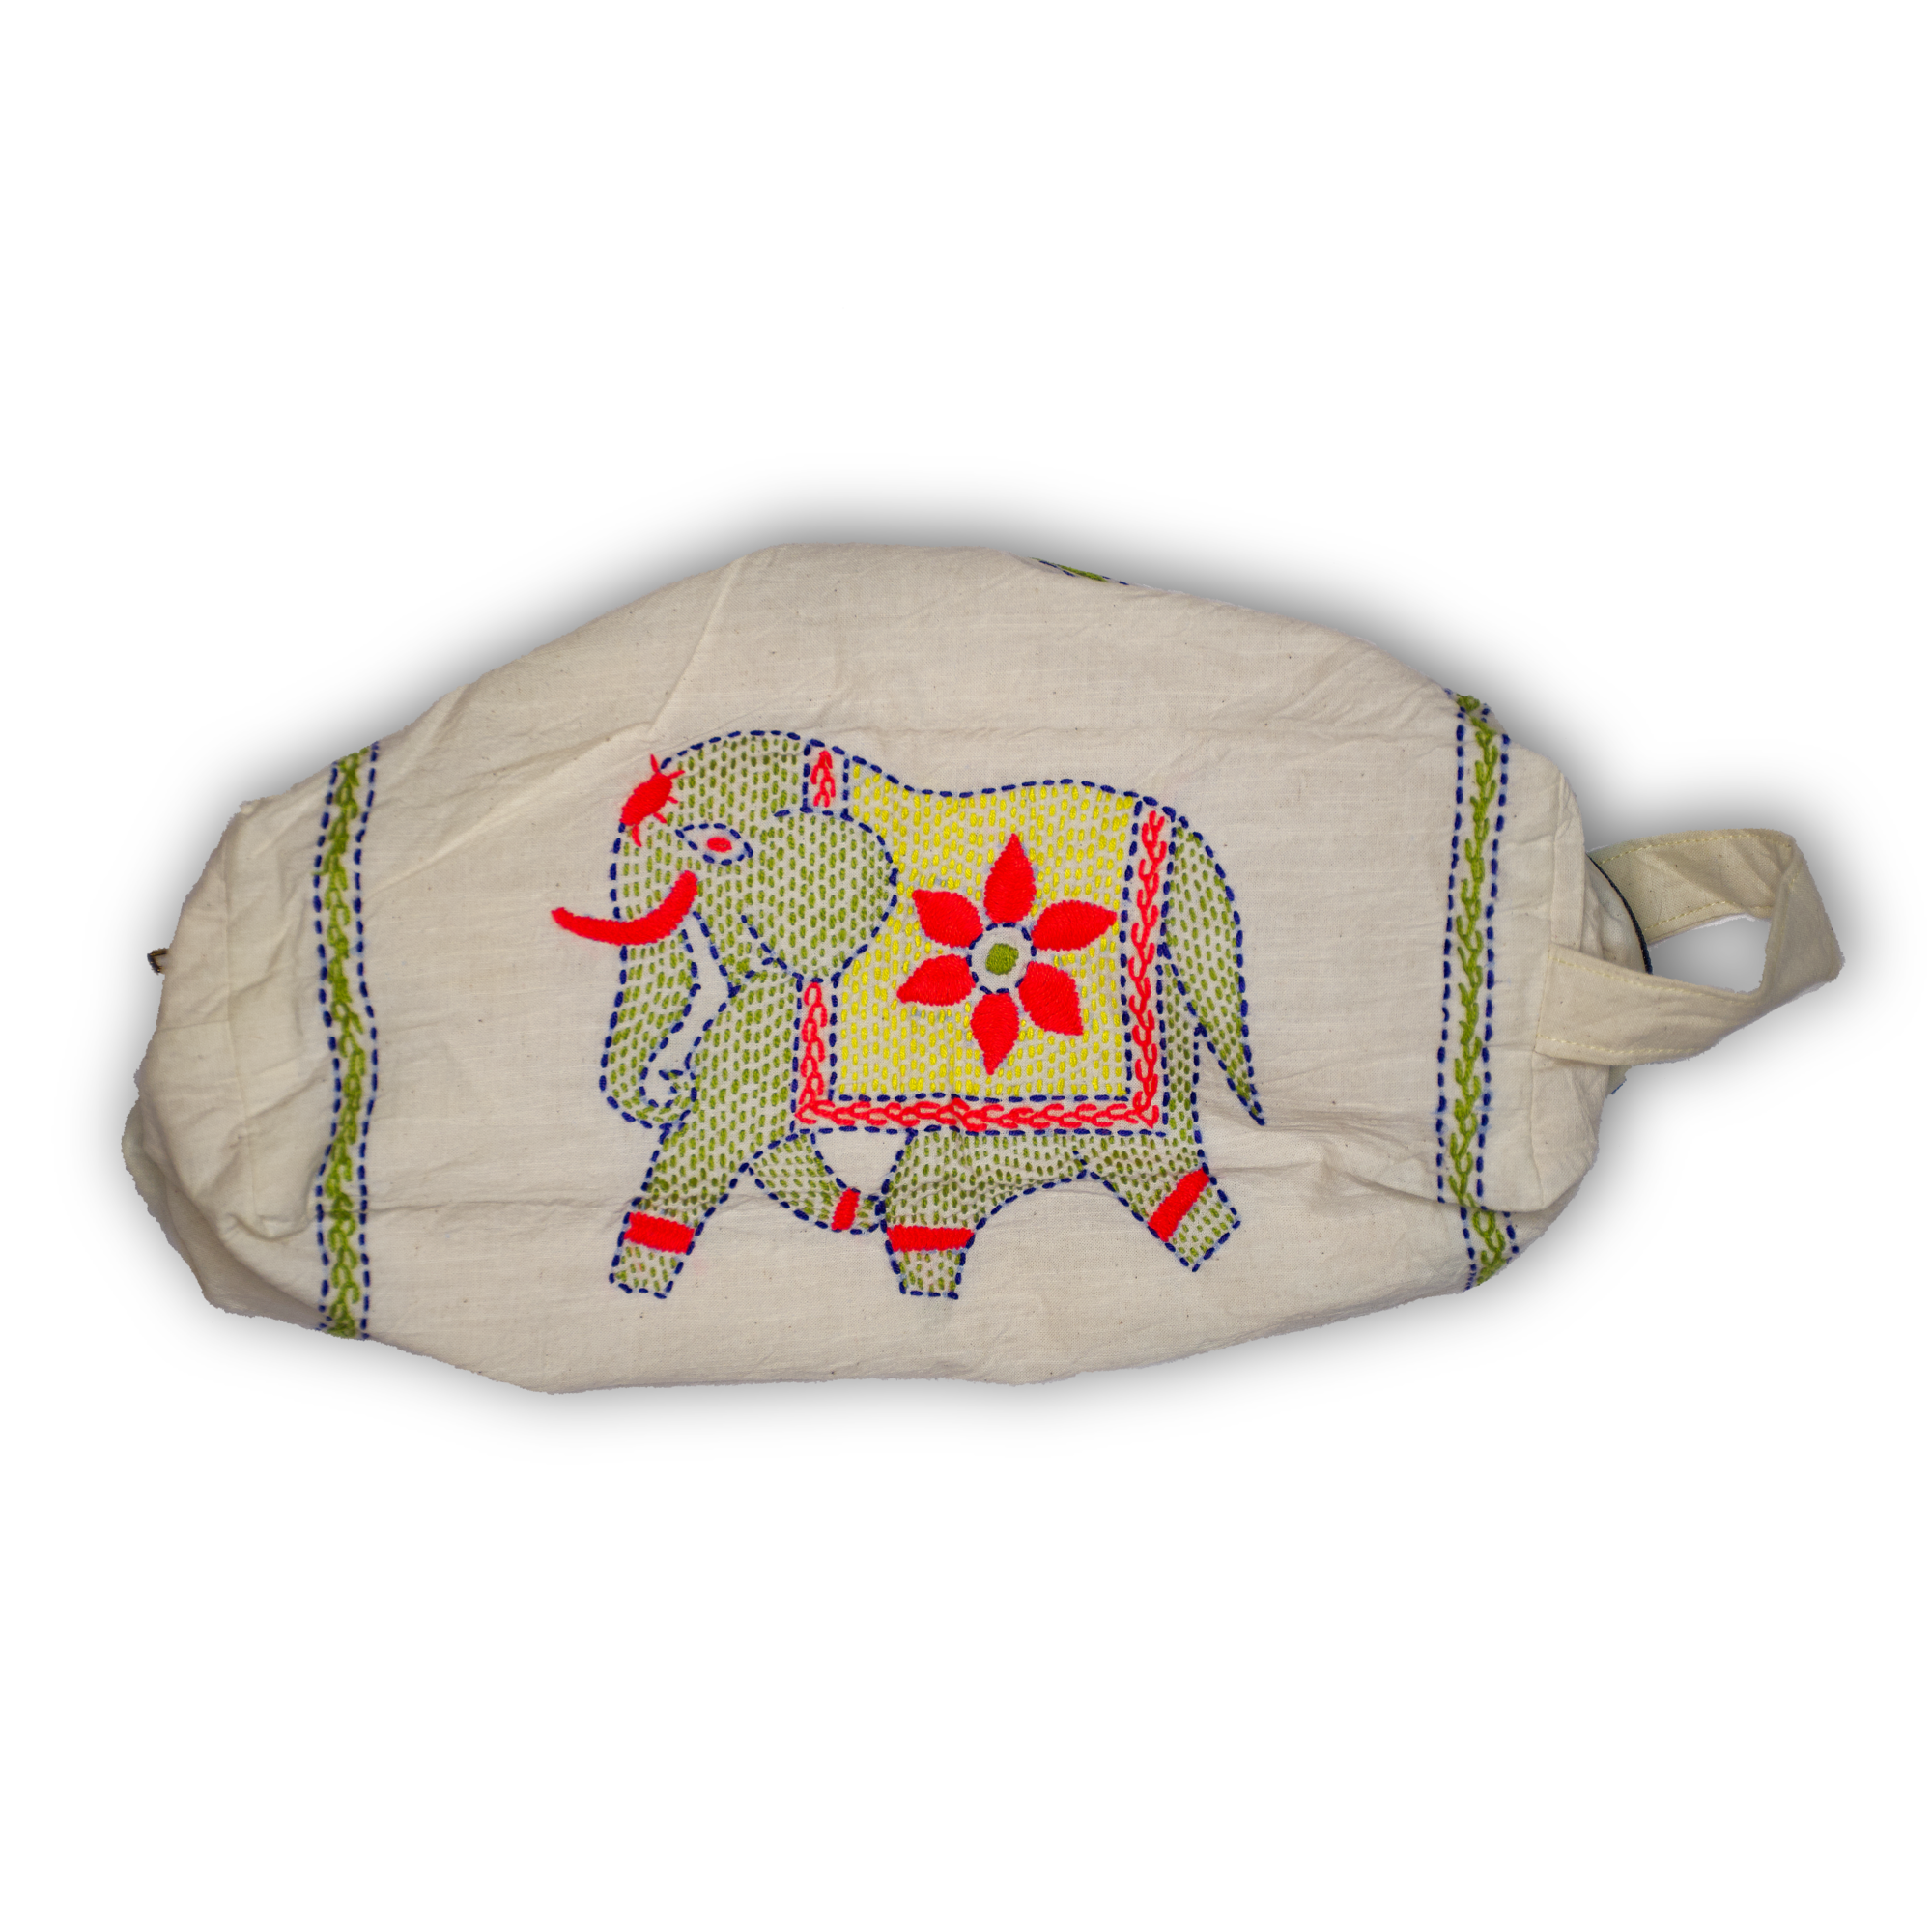 Pouch Bags - Dinajpur (elephant) Design